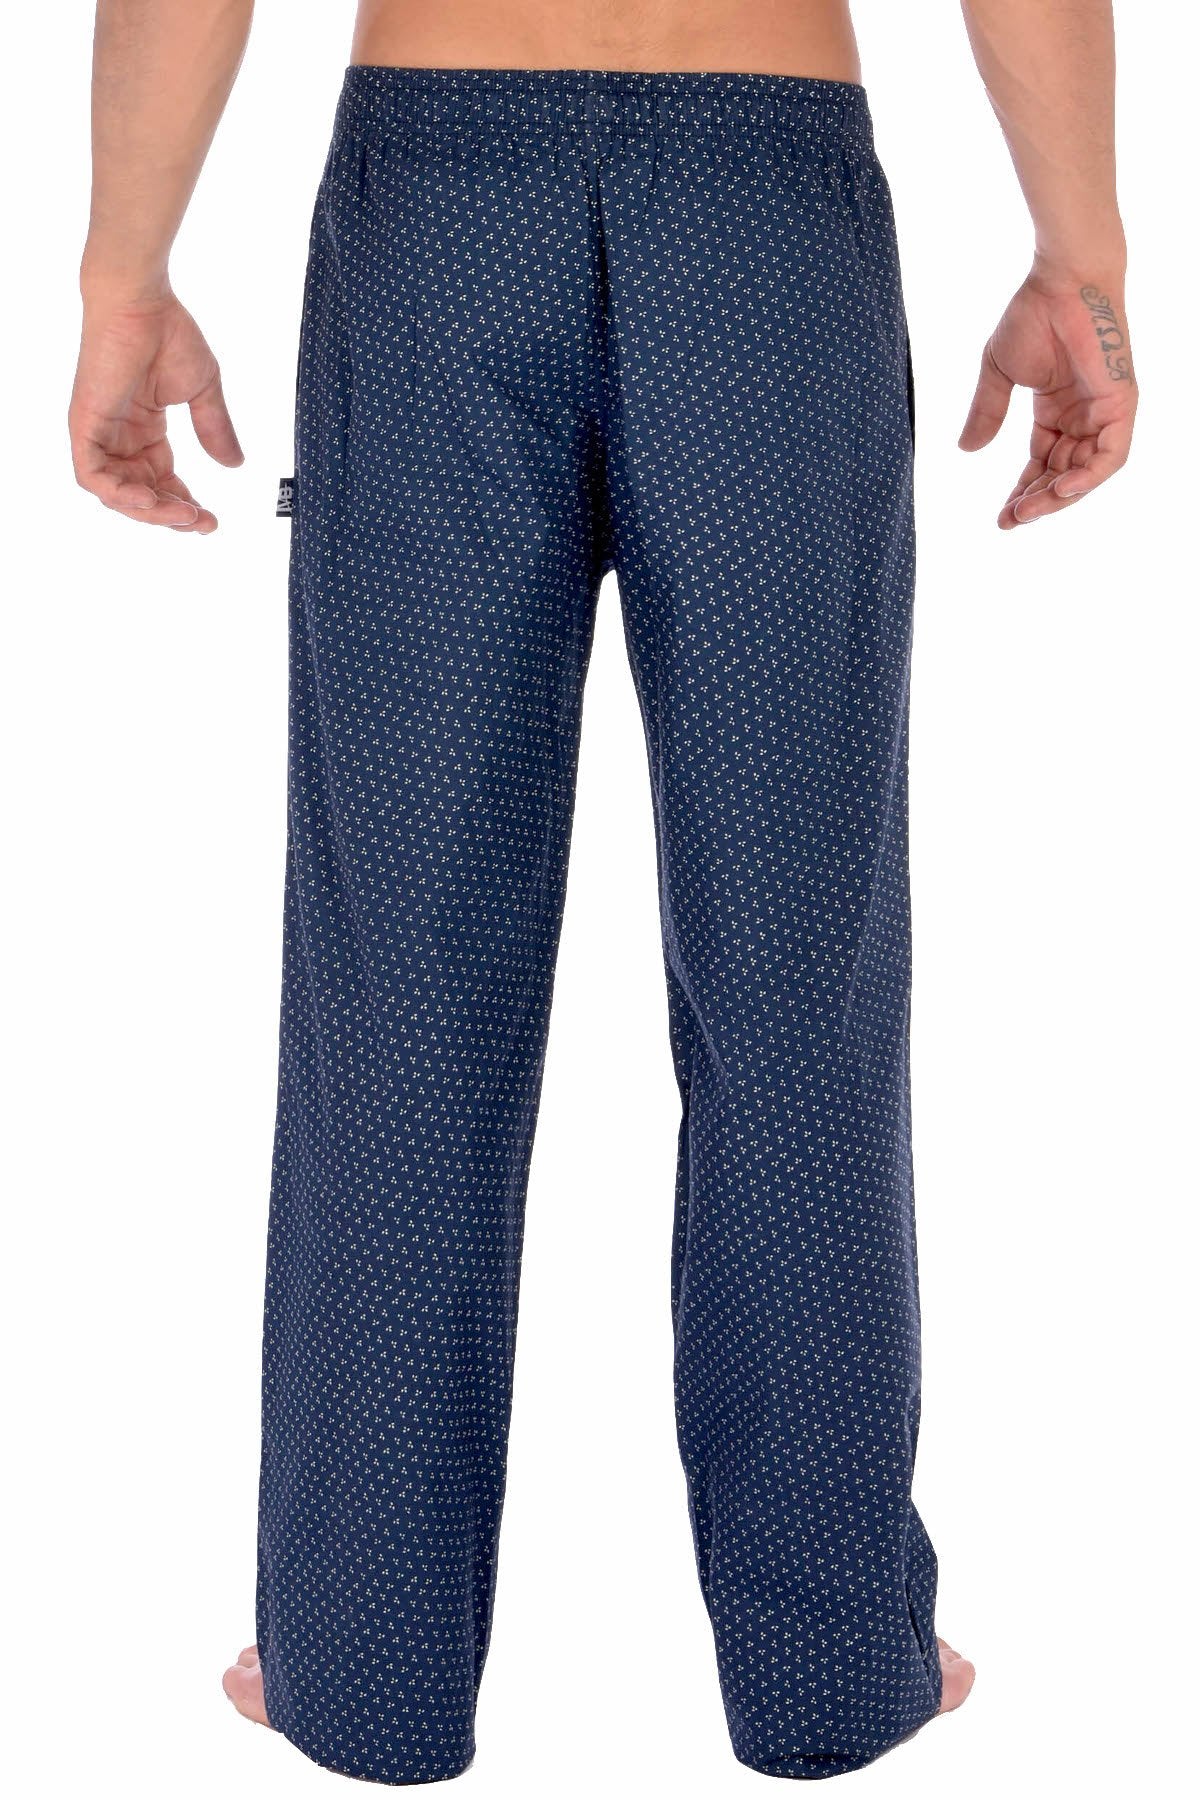 Memphis Blues Navy-Printed Cotton Woven Sleep Pant